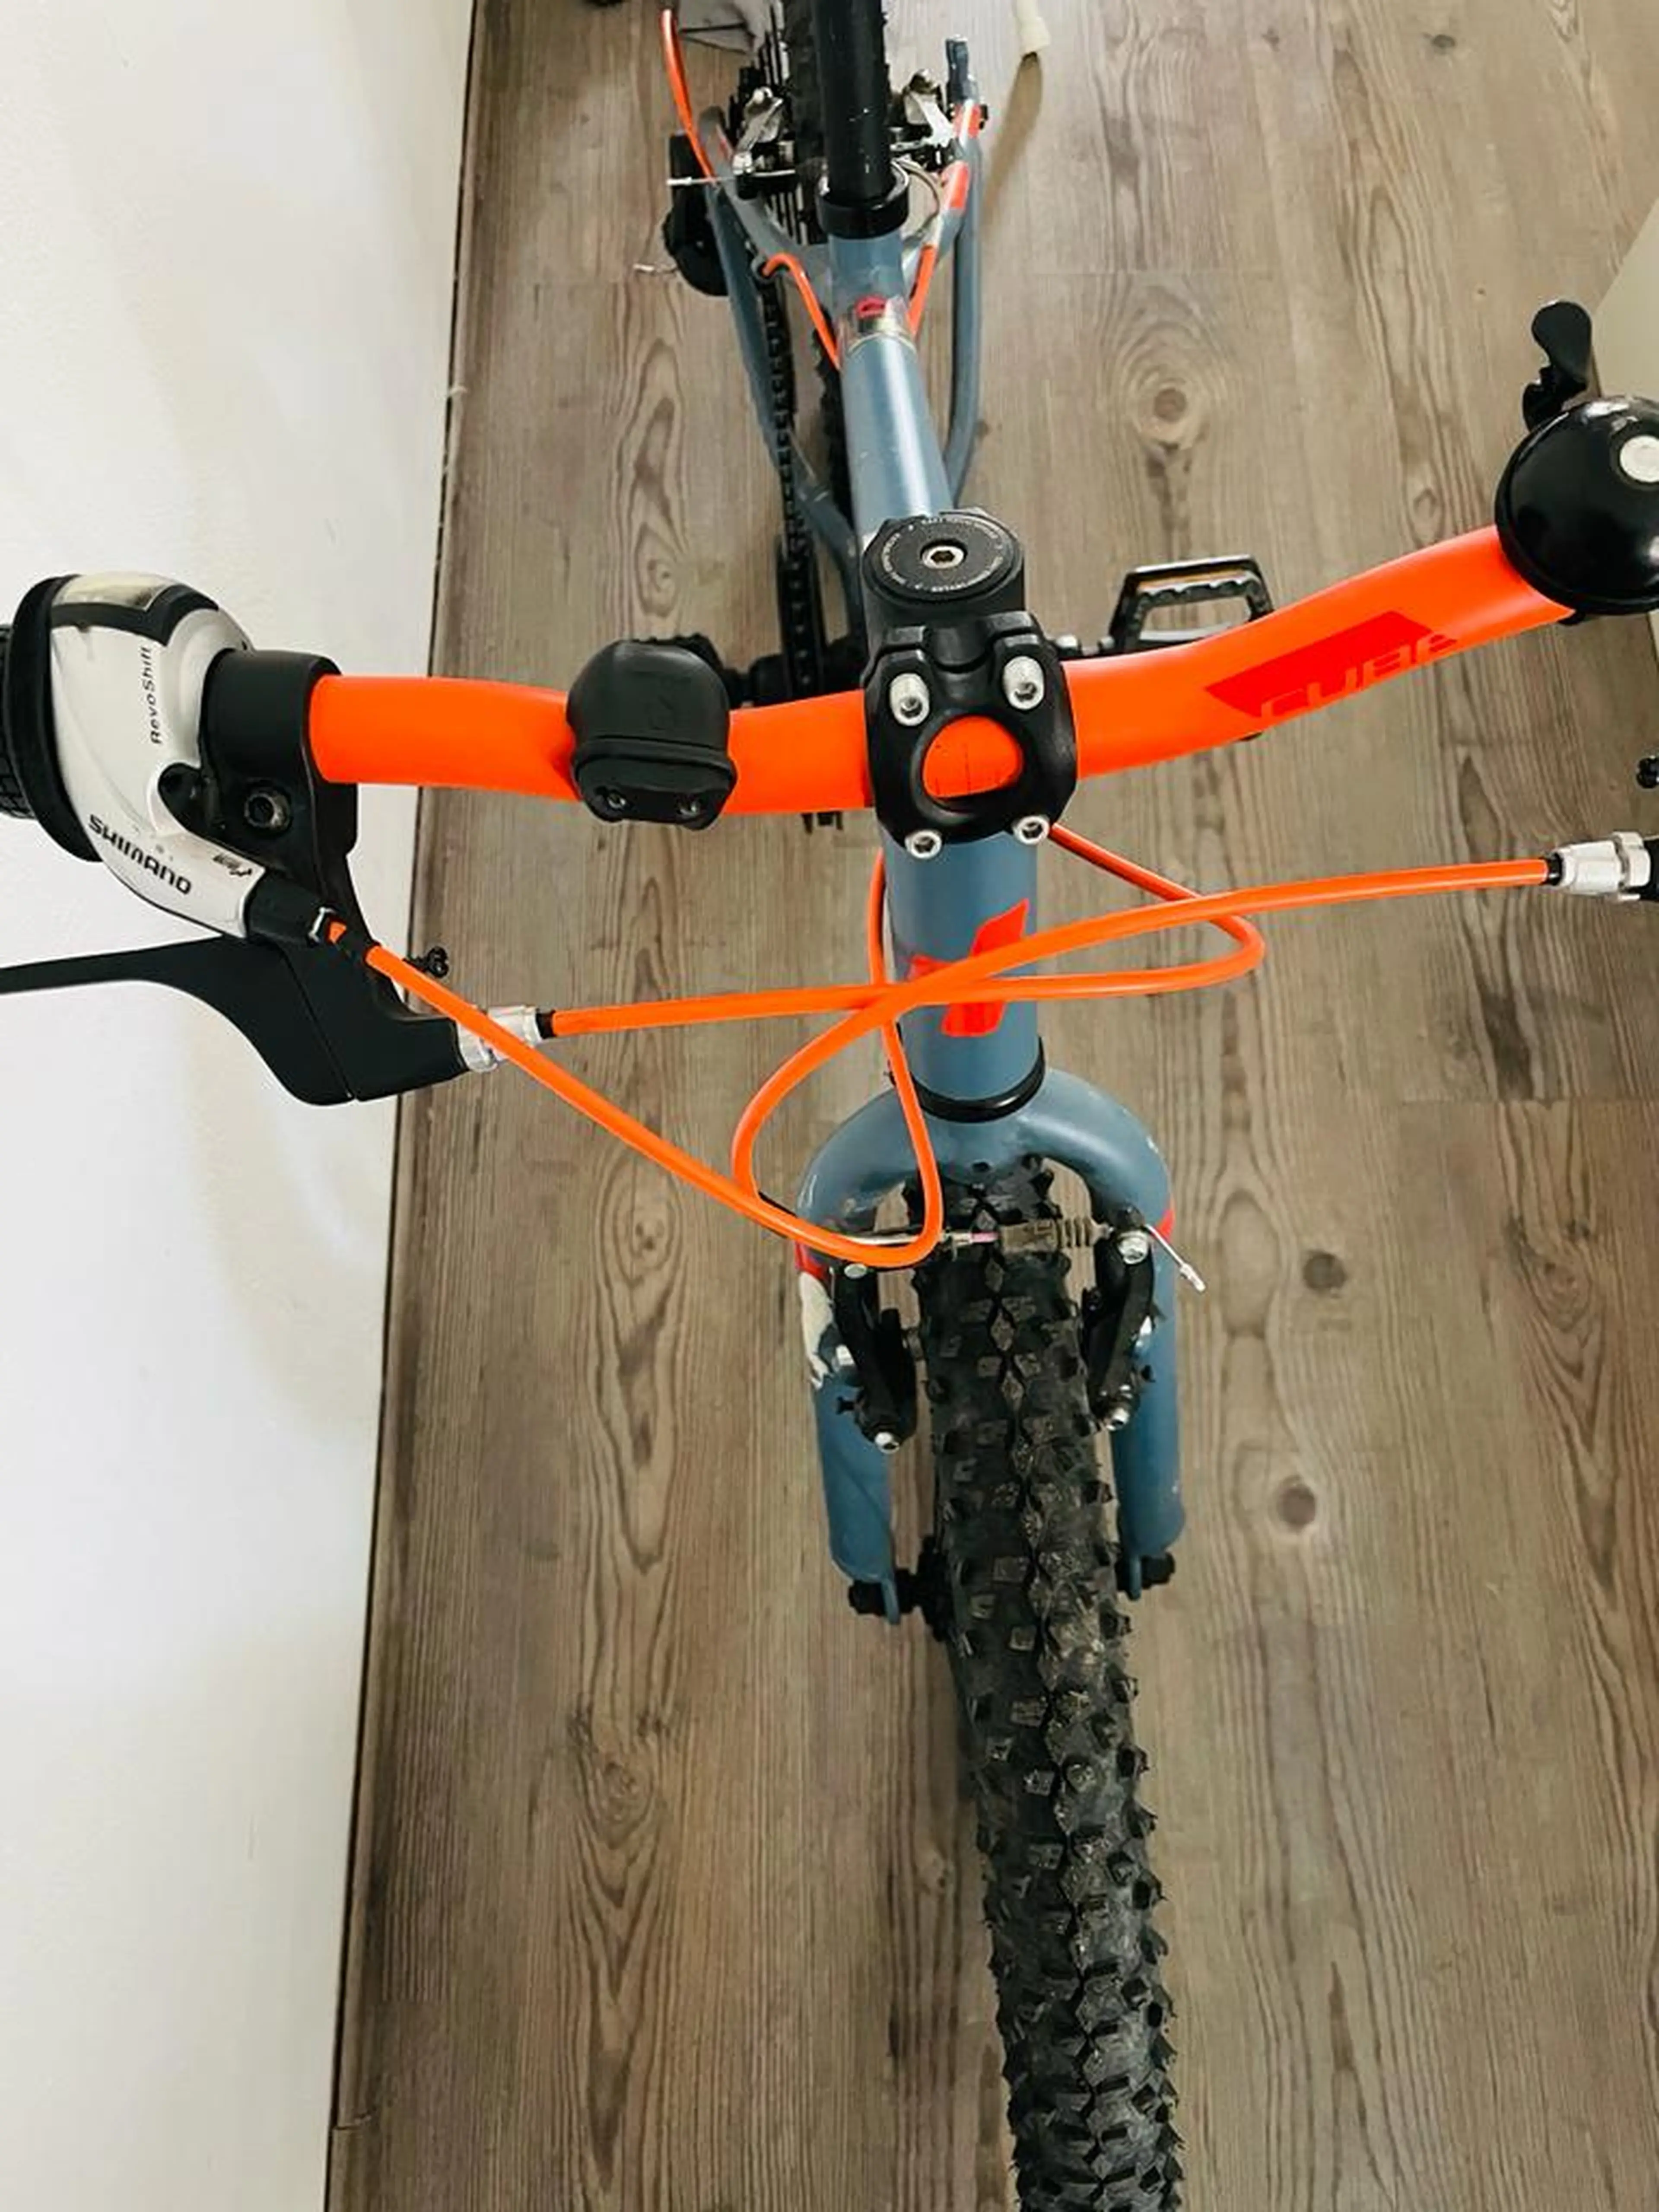 2. Vand Bicicleta Cube Acid 200, 20 inch, Grey - Orange